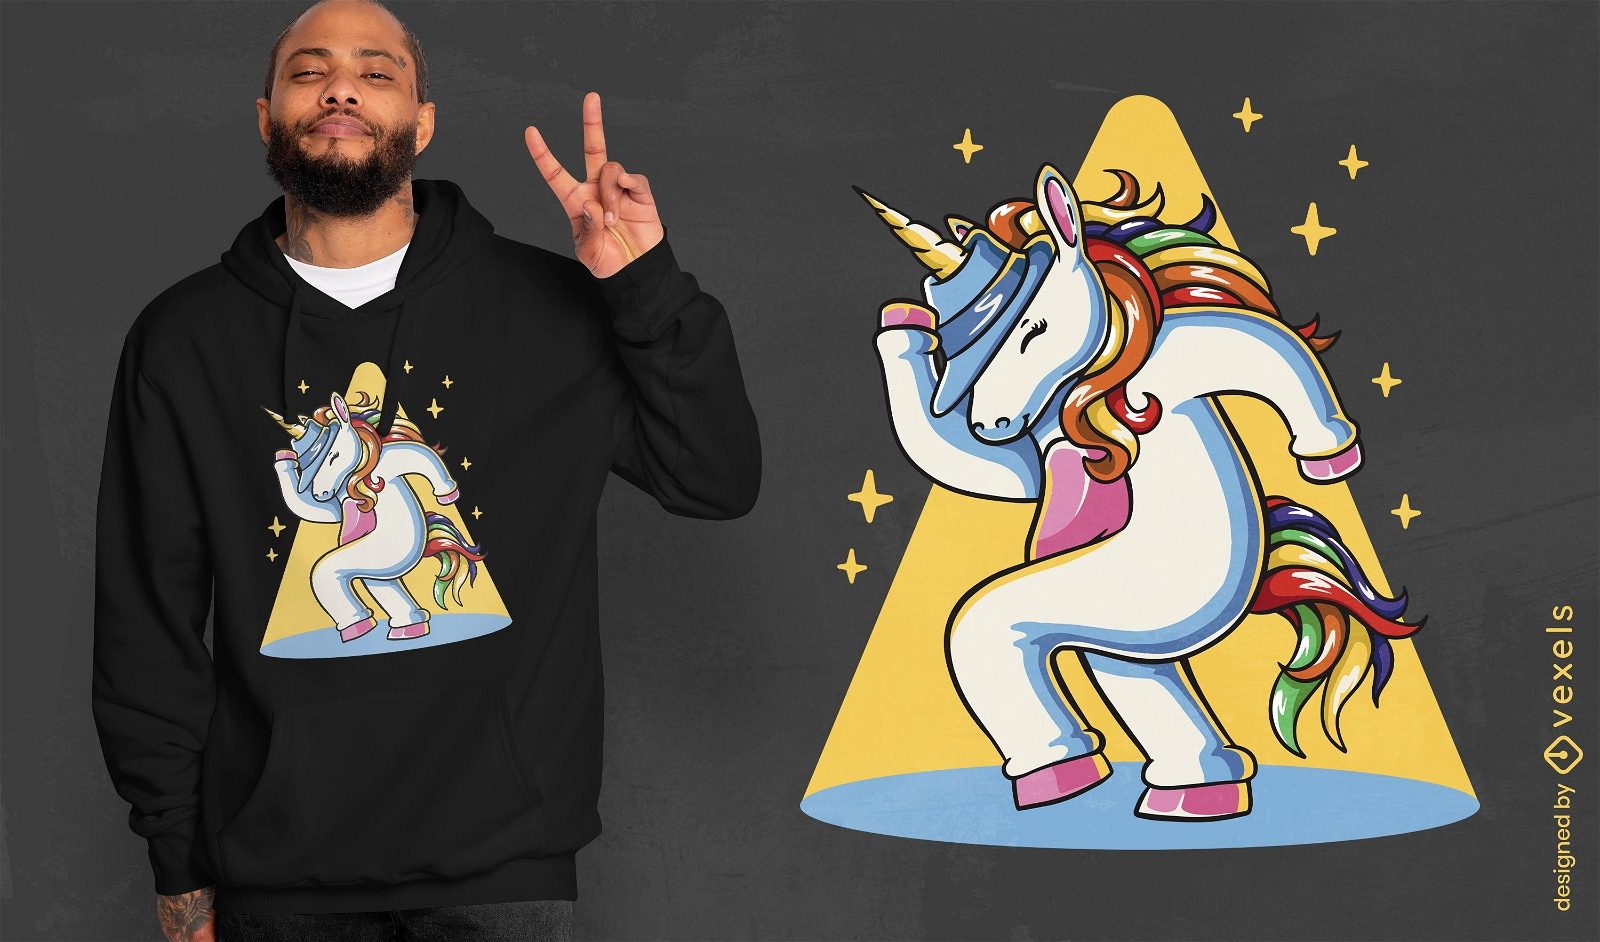 Dancing unicorn t-shirt design